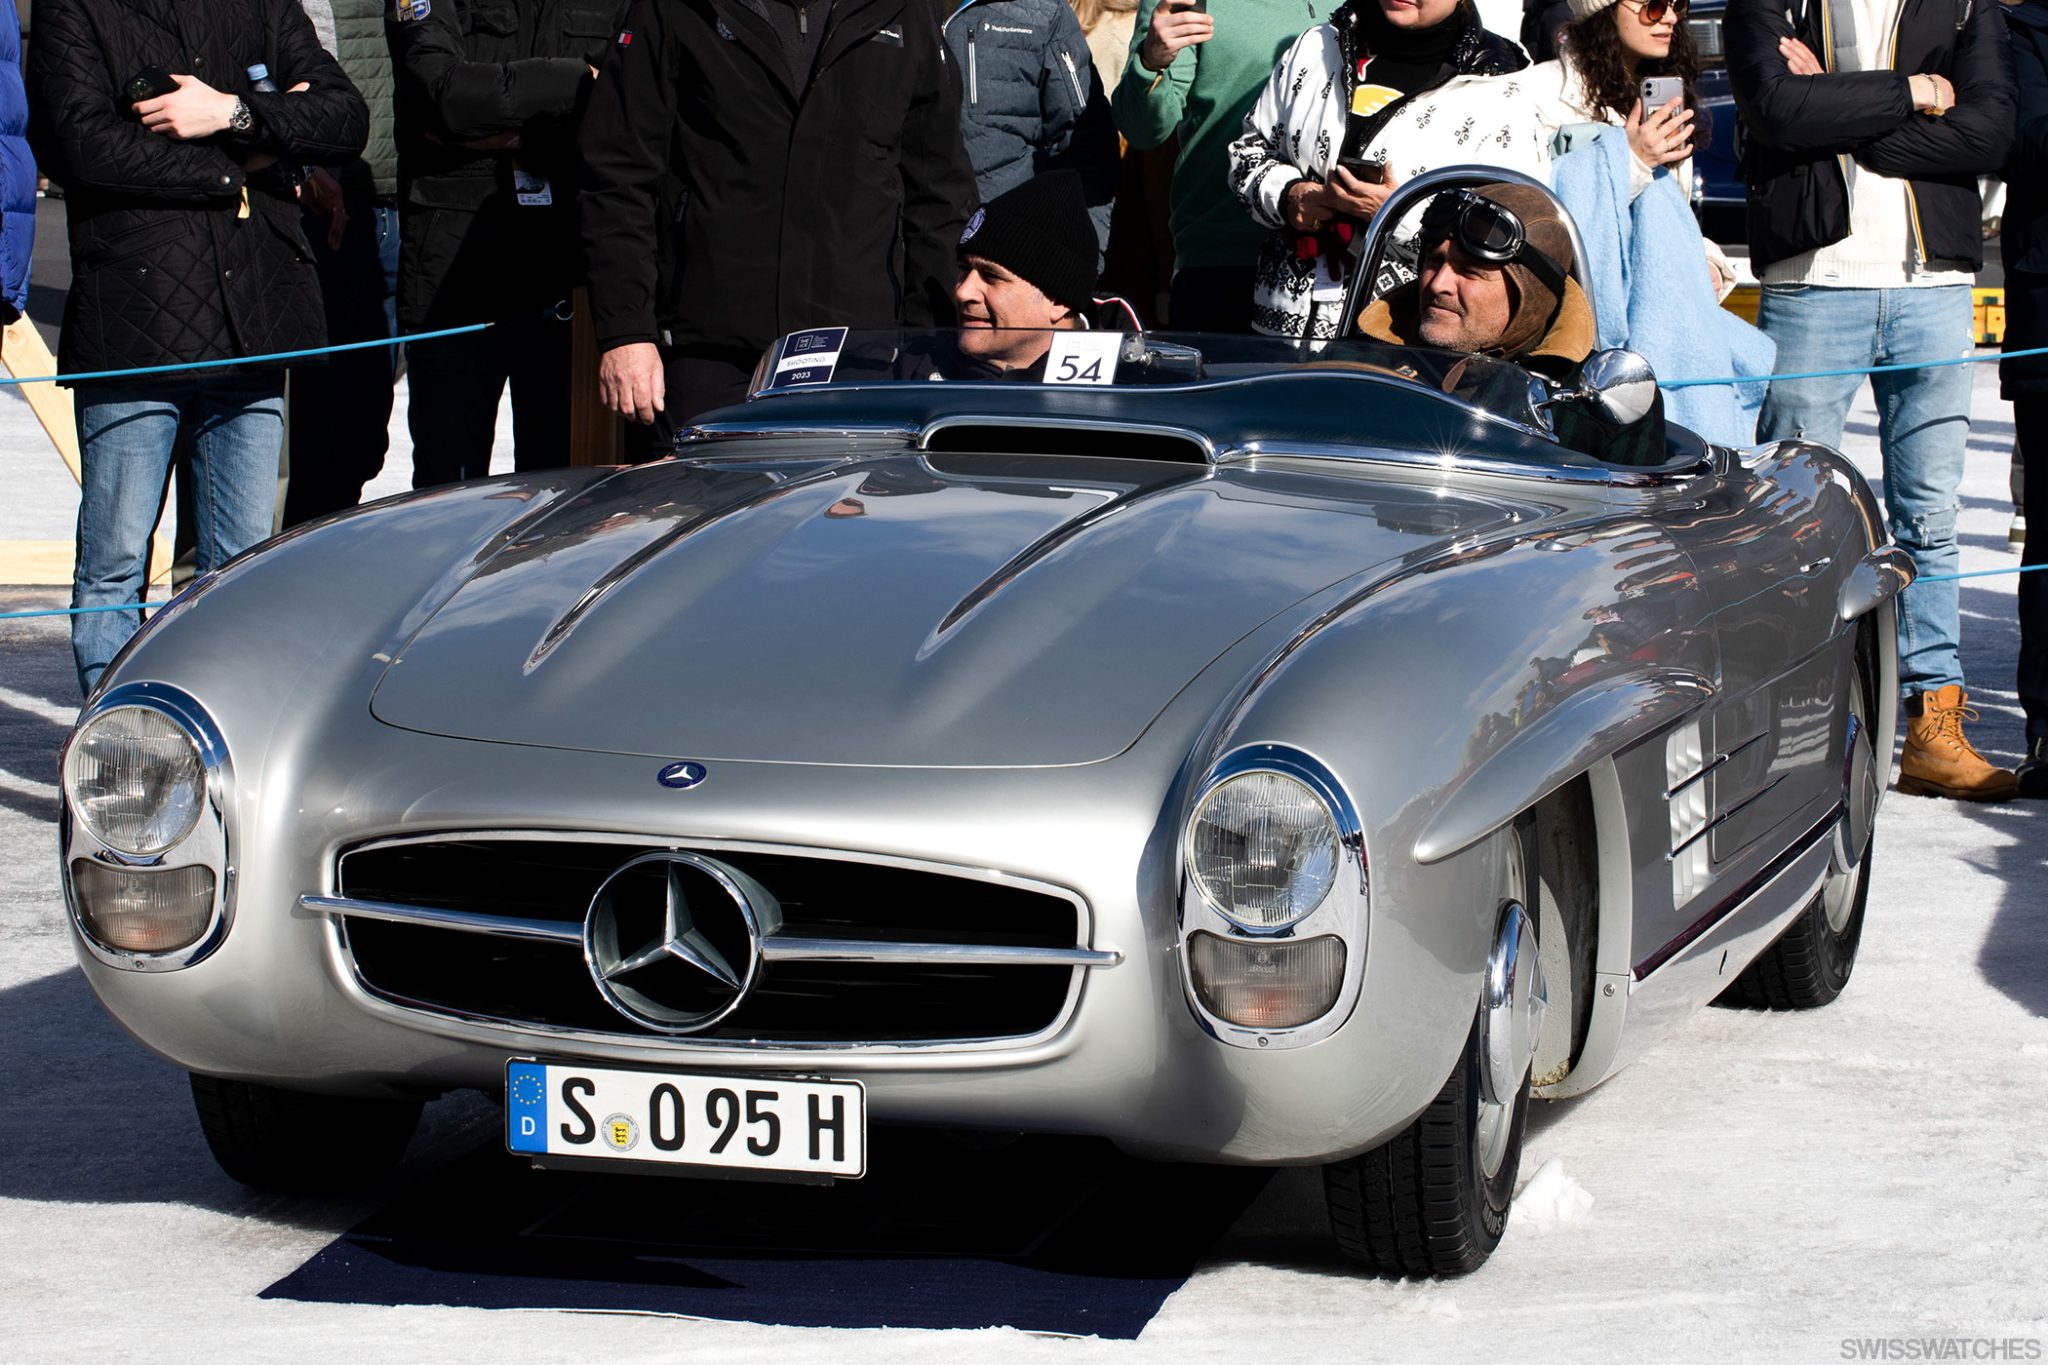 The-ICE-St-Moritz-Richard-Mille-Mercedes-Benz-300-SL-1